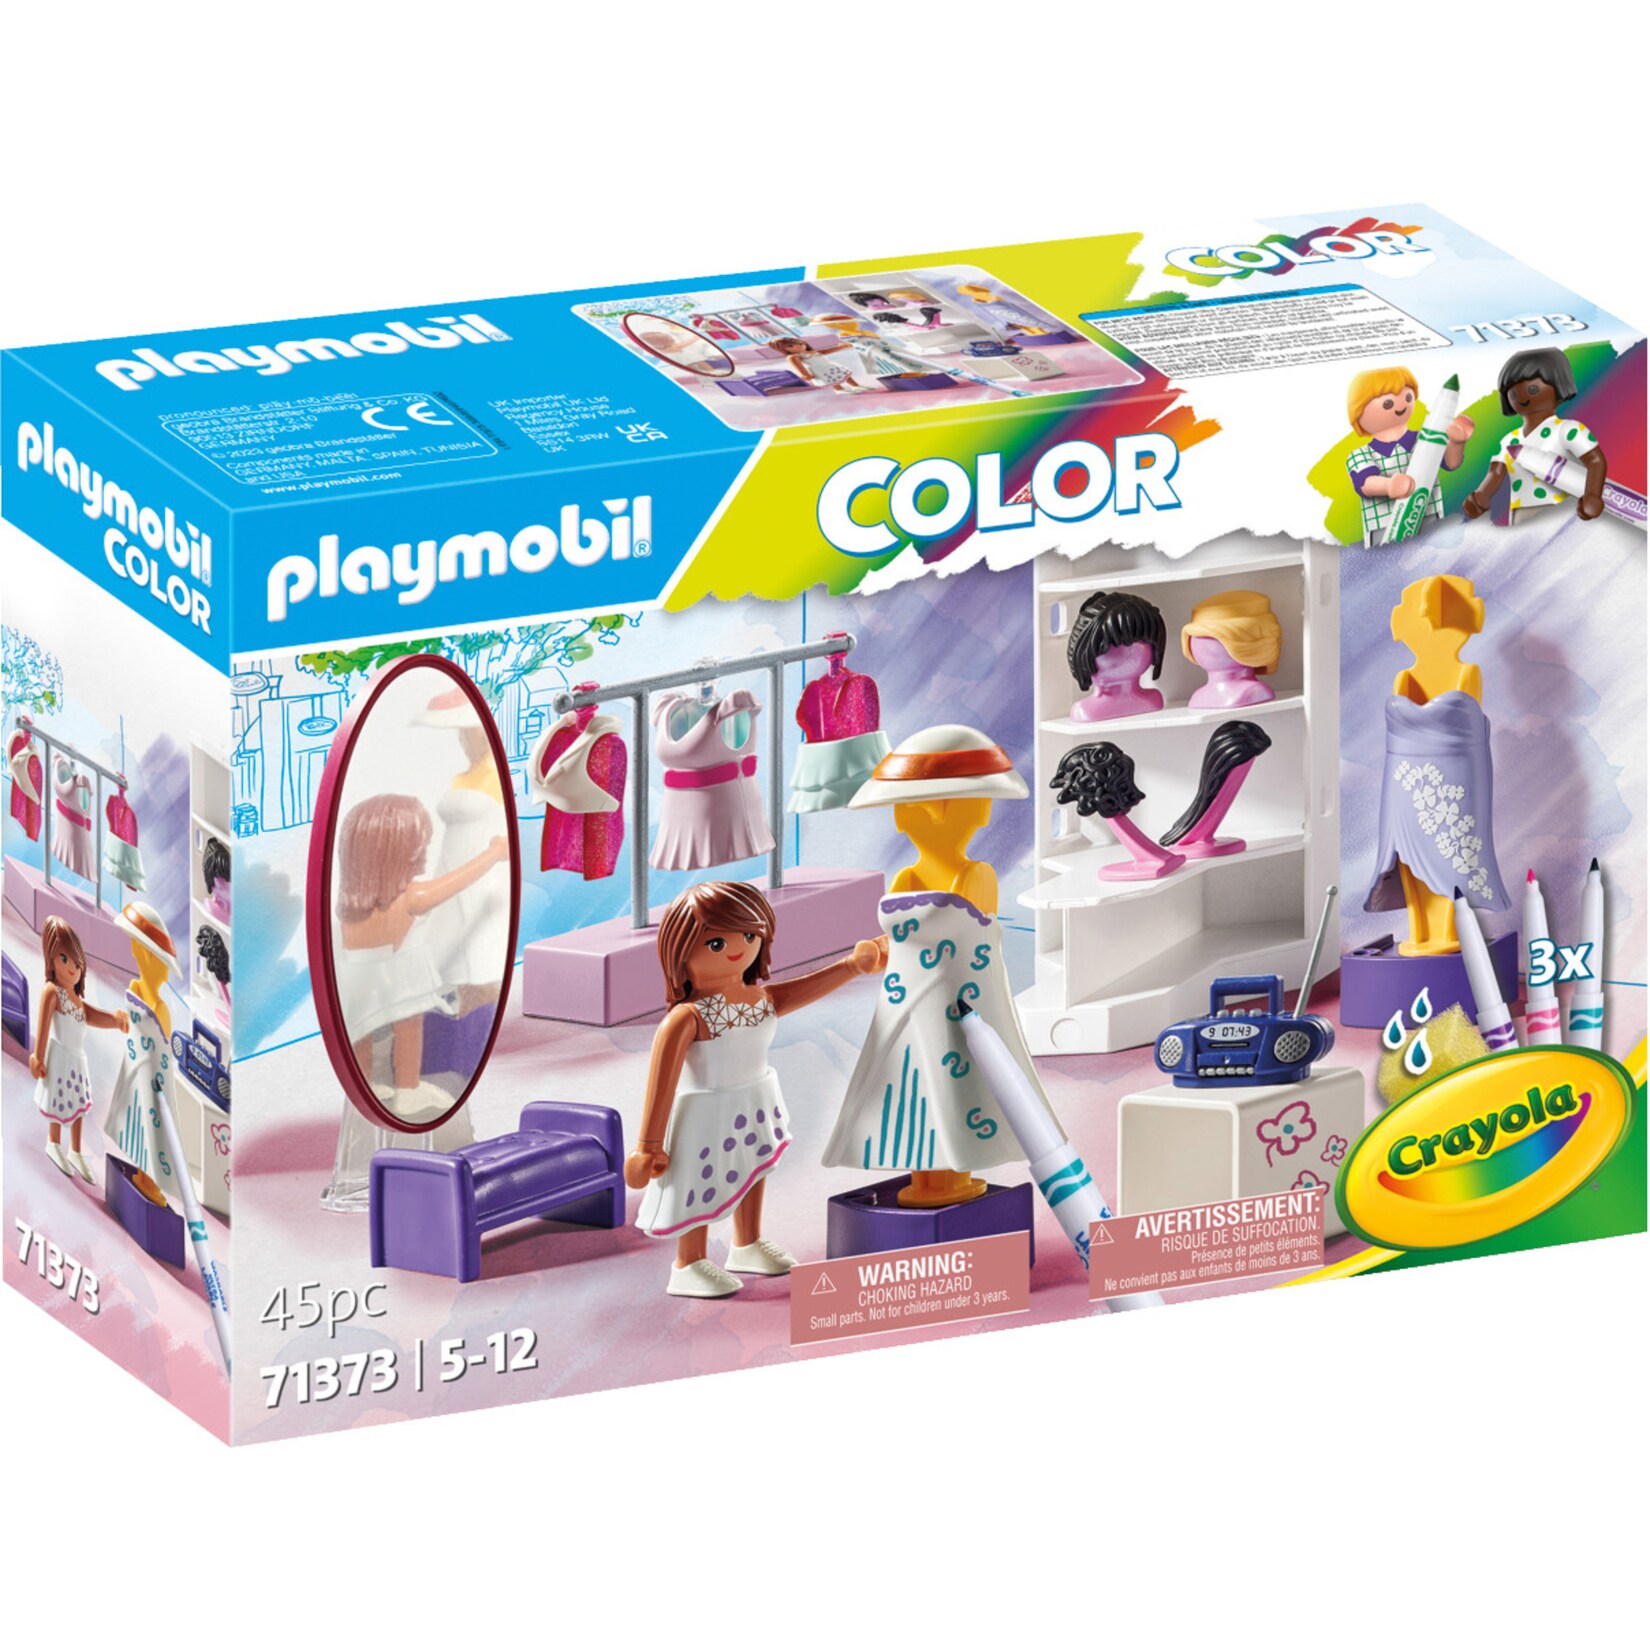 PLAYMOBIL Konstruktionsspielzeug Color Fashion Design Set